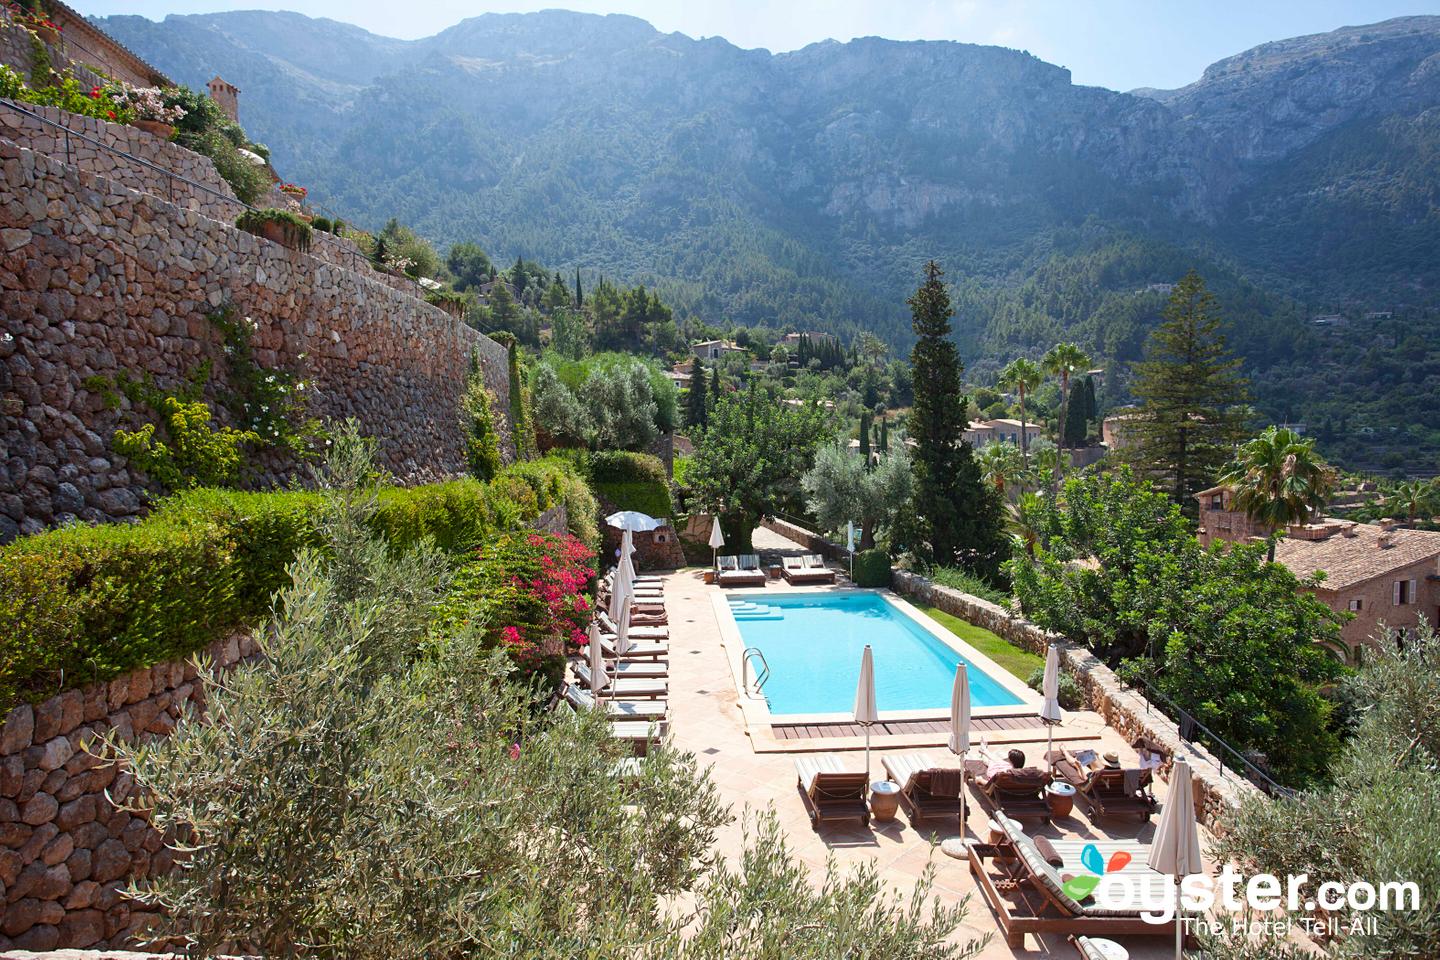 Belmond la Residencia: The Most Luxurious Hotel in Mallorca